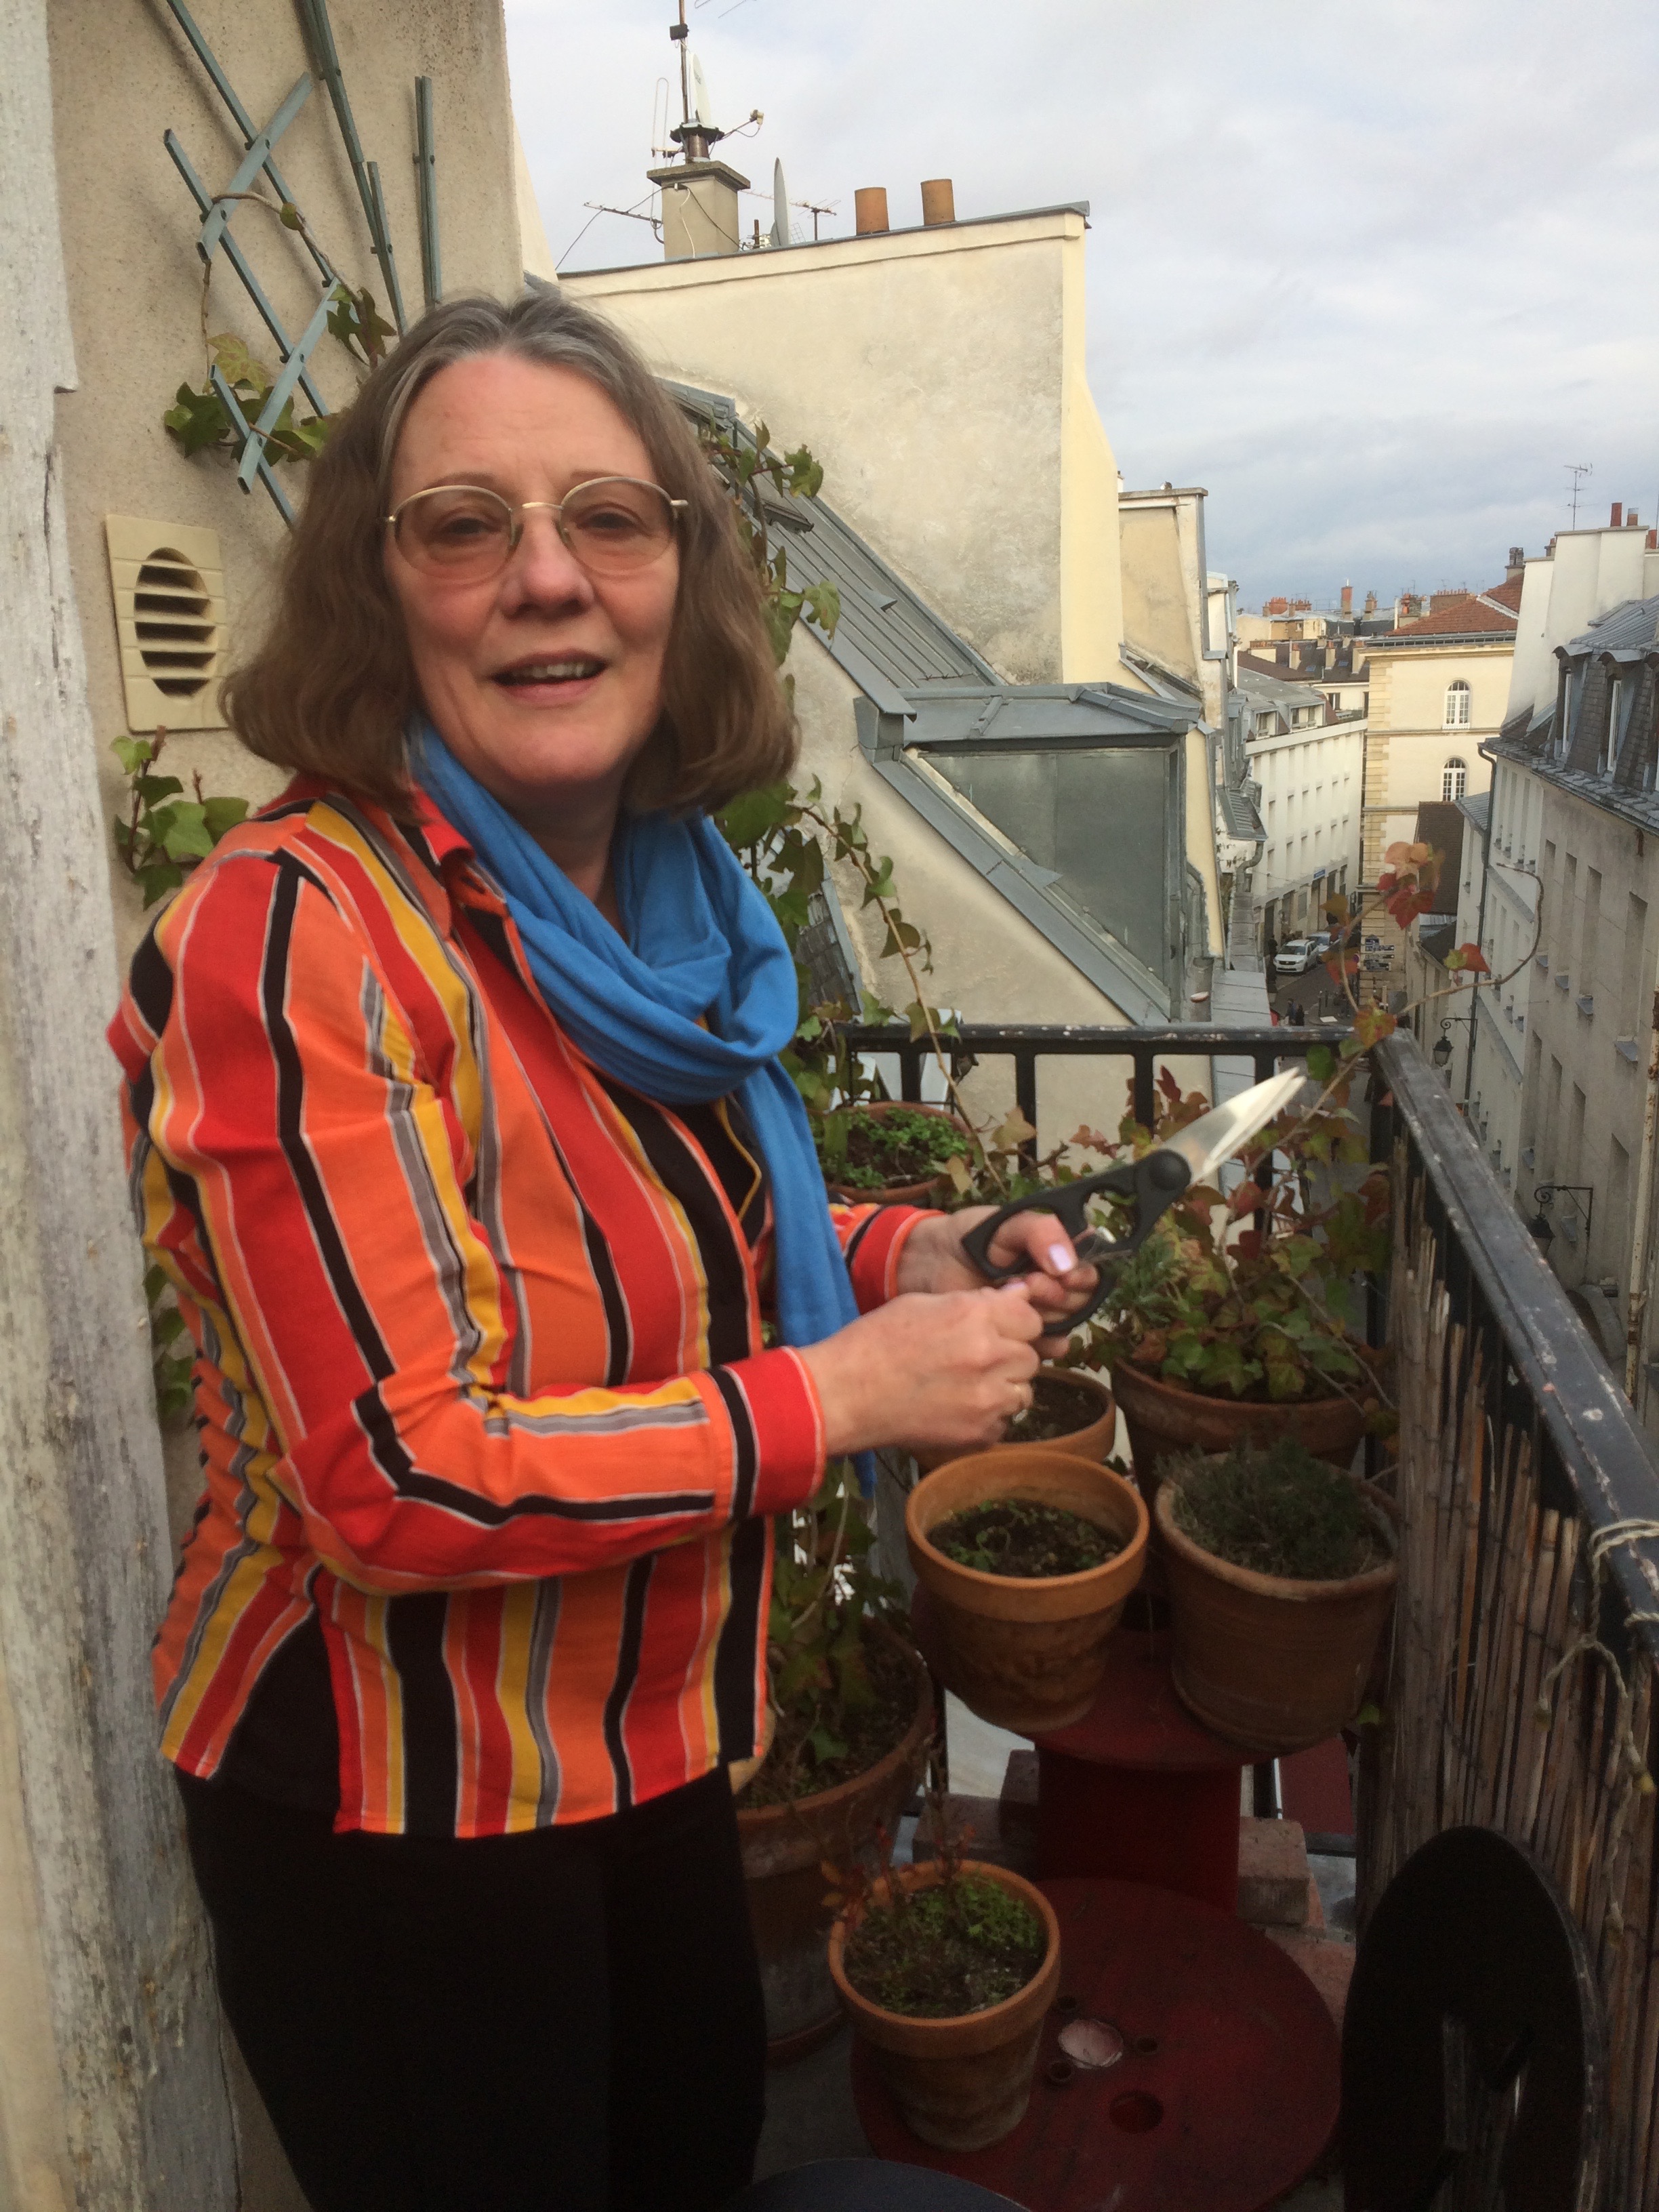 2017 - Feb 28, Gardening in Paris